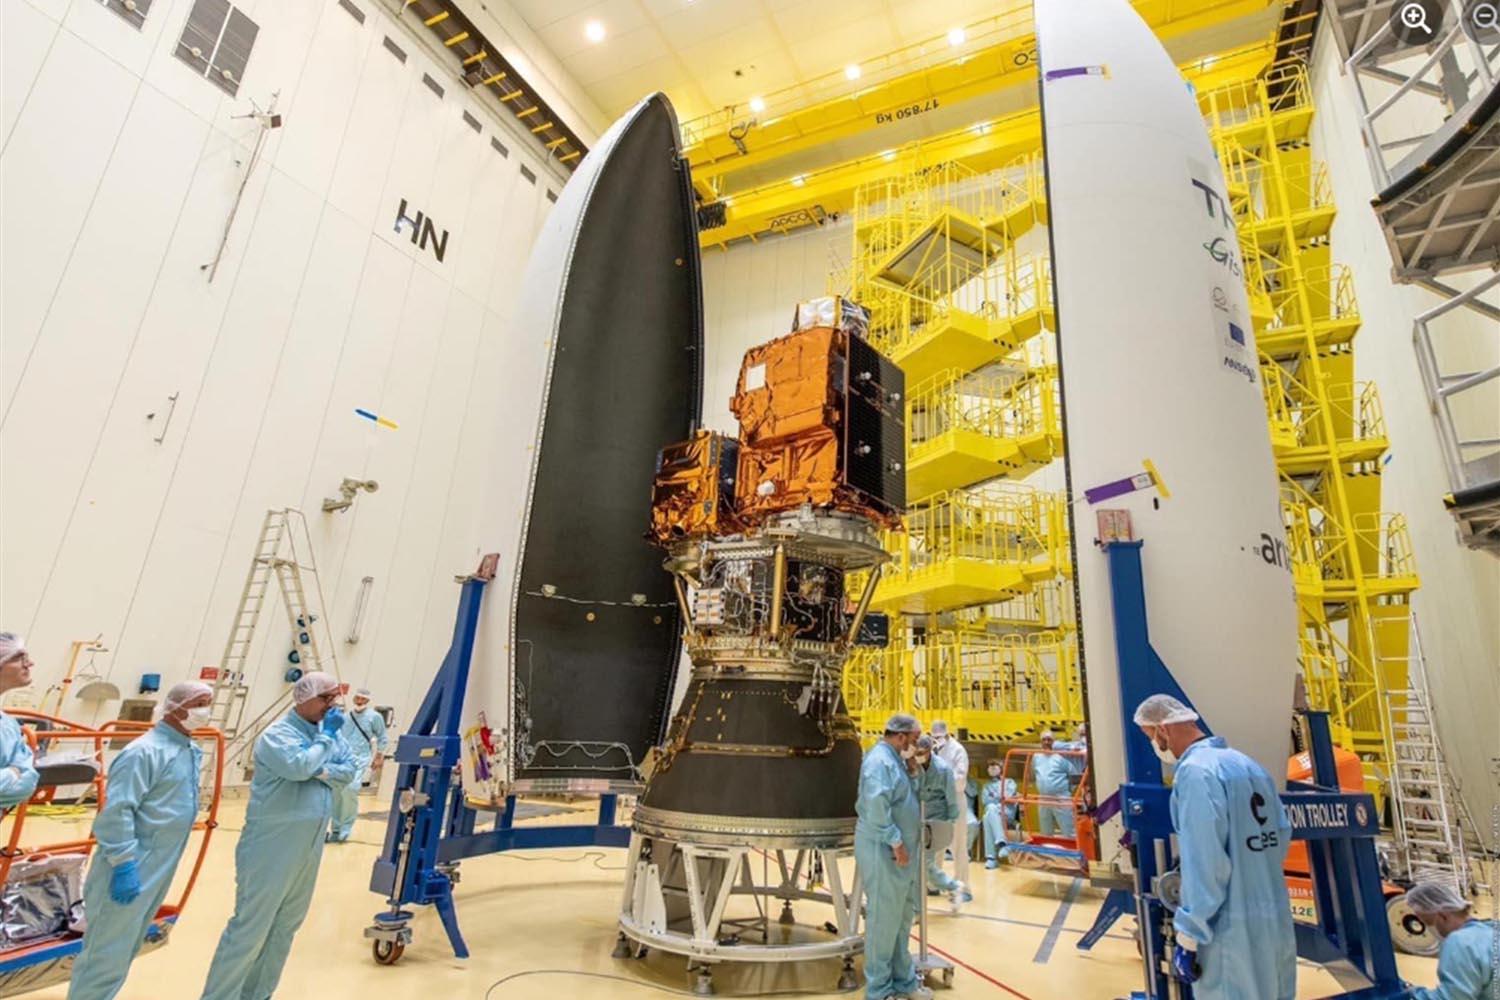 Postpone-the-launch-of-Theos-2-satellite-into-space-SPACEBAR-Hero.jpg